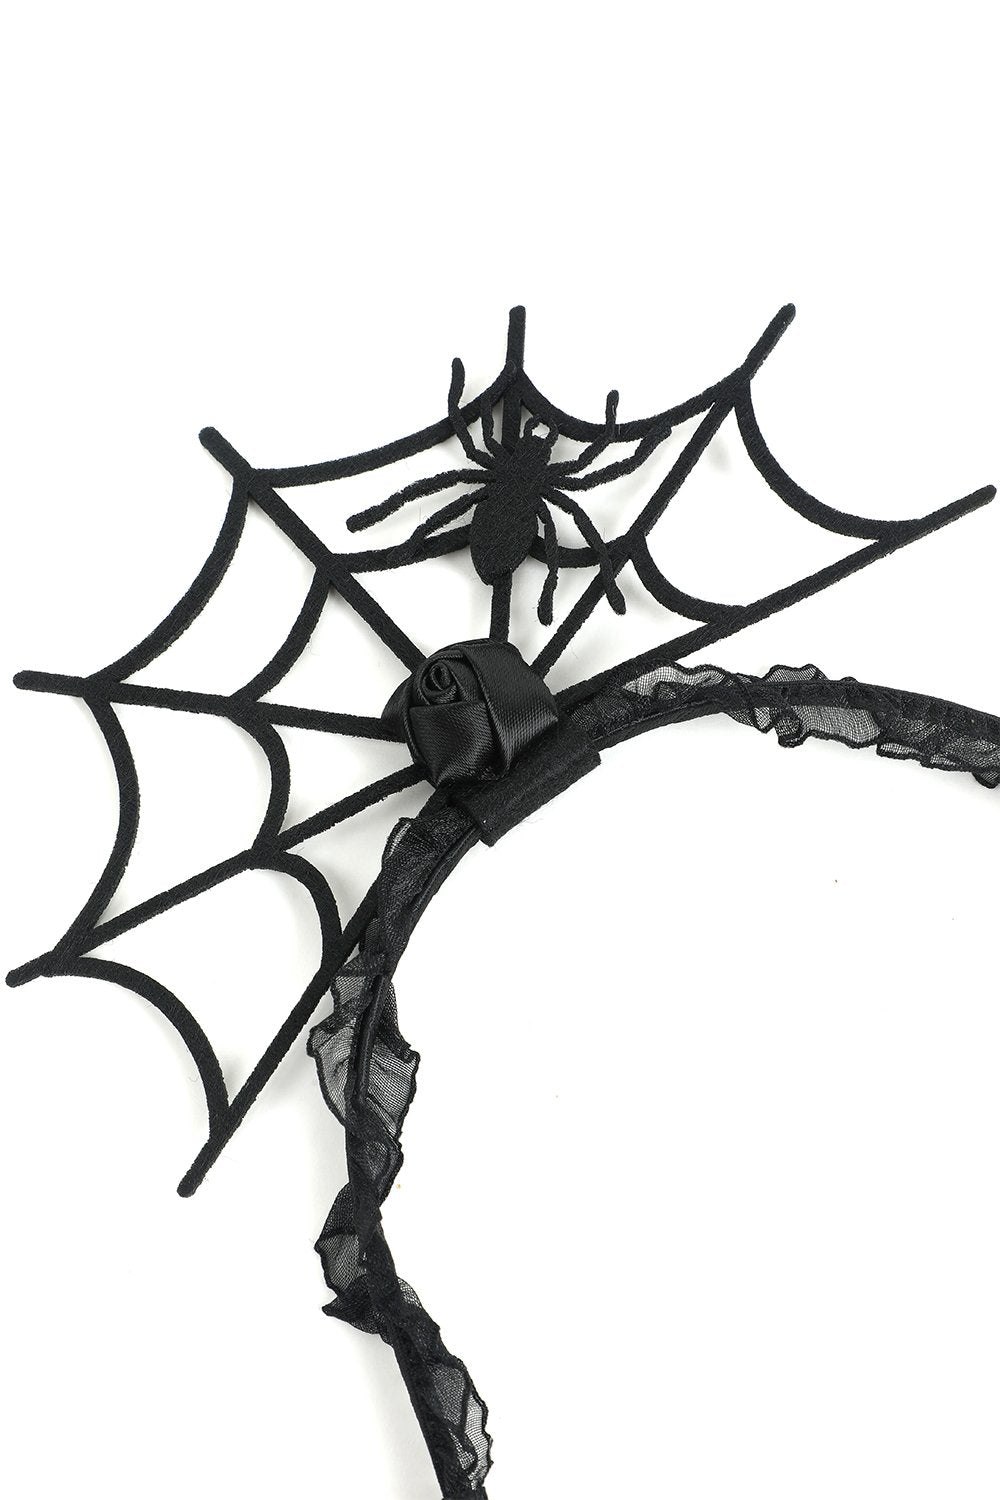 Spider Web Halloween Funny Headband